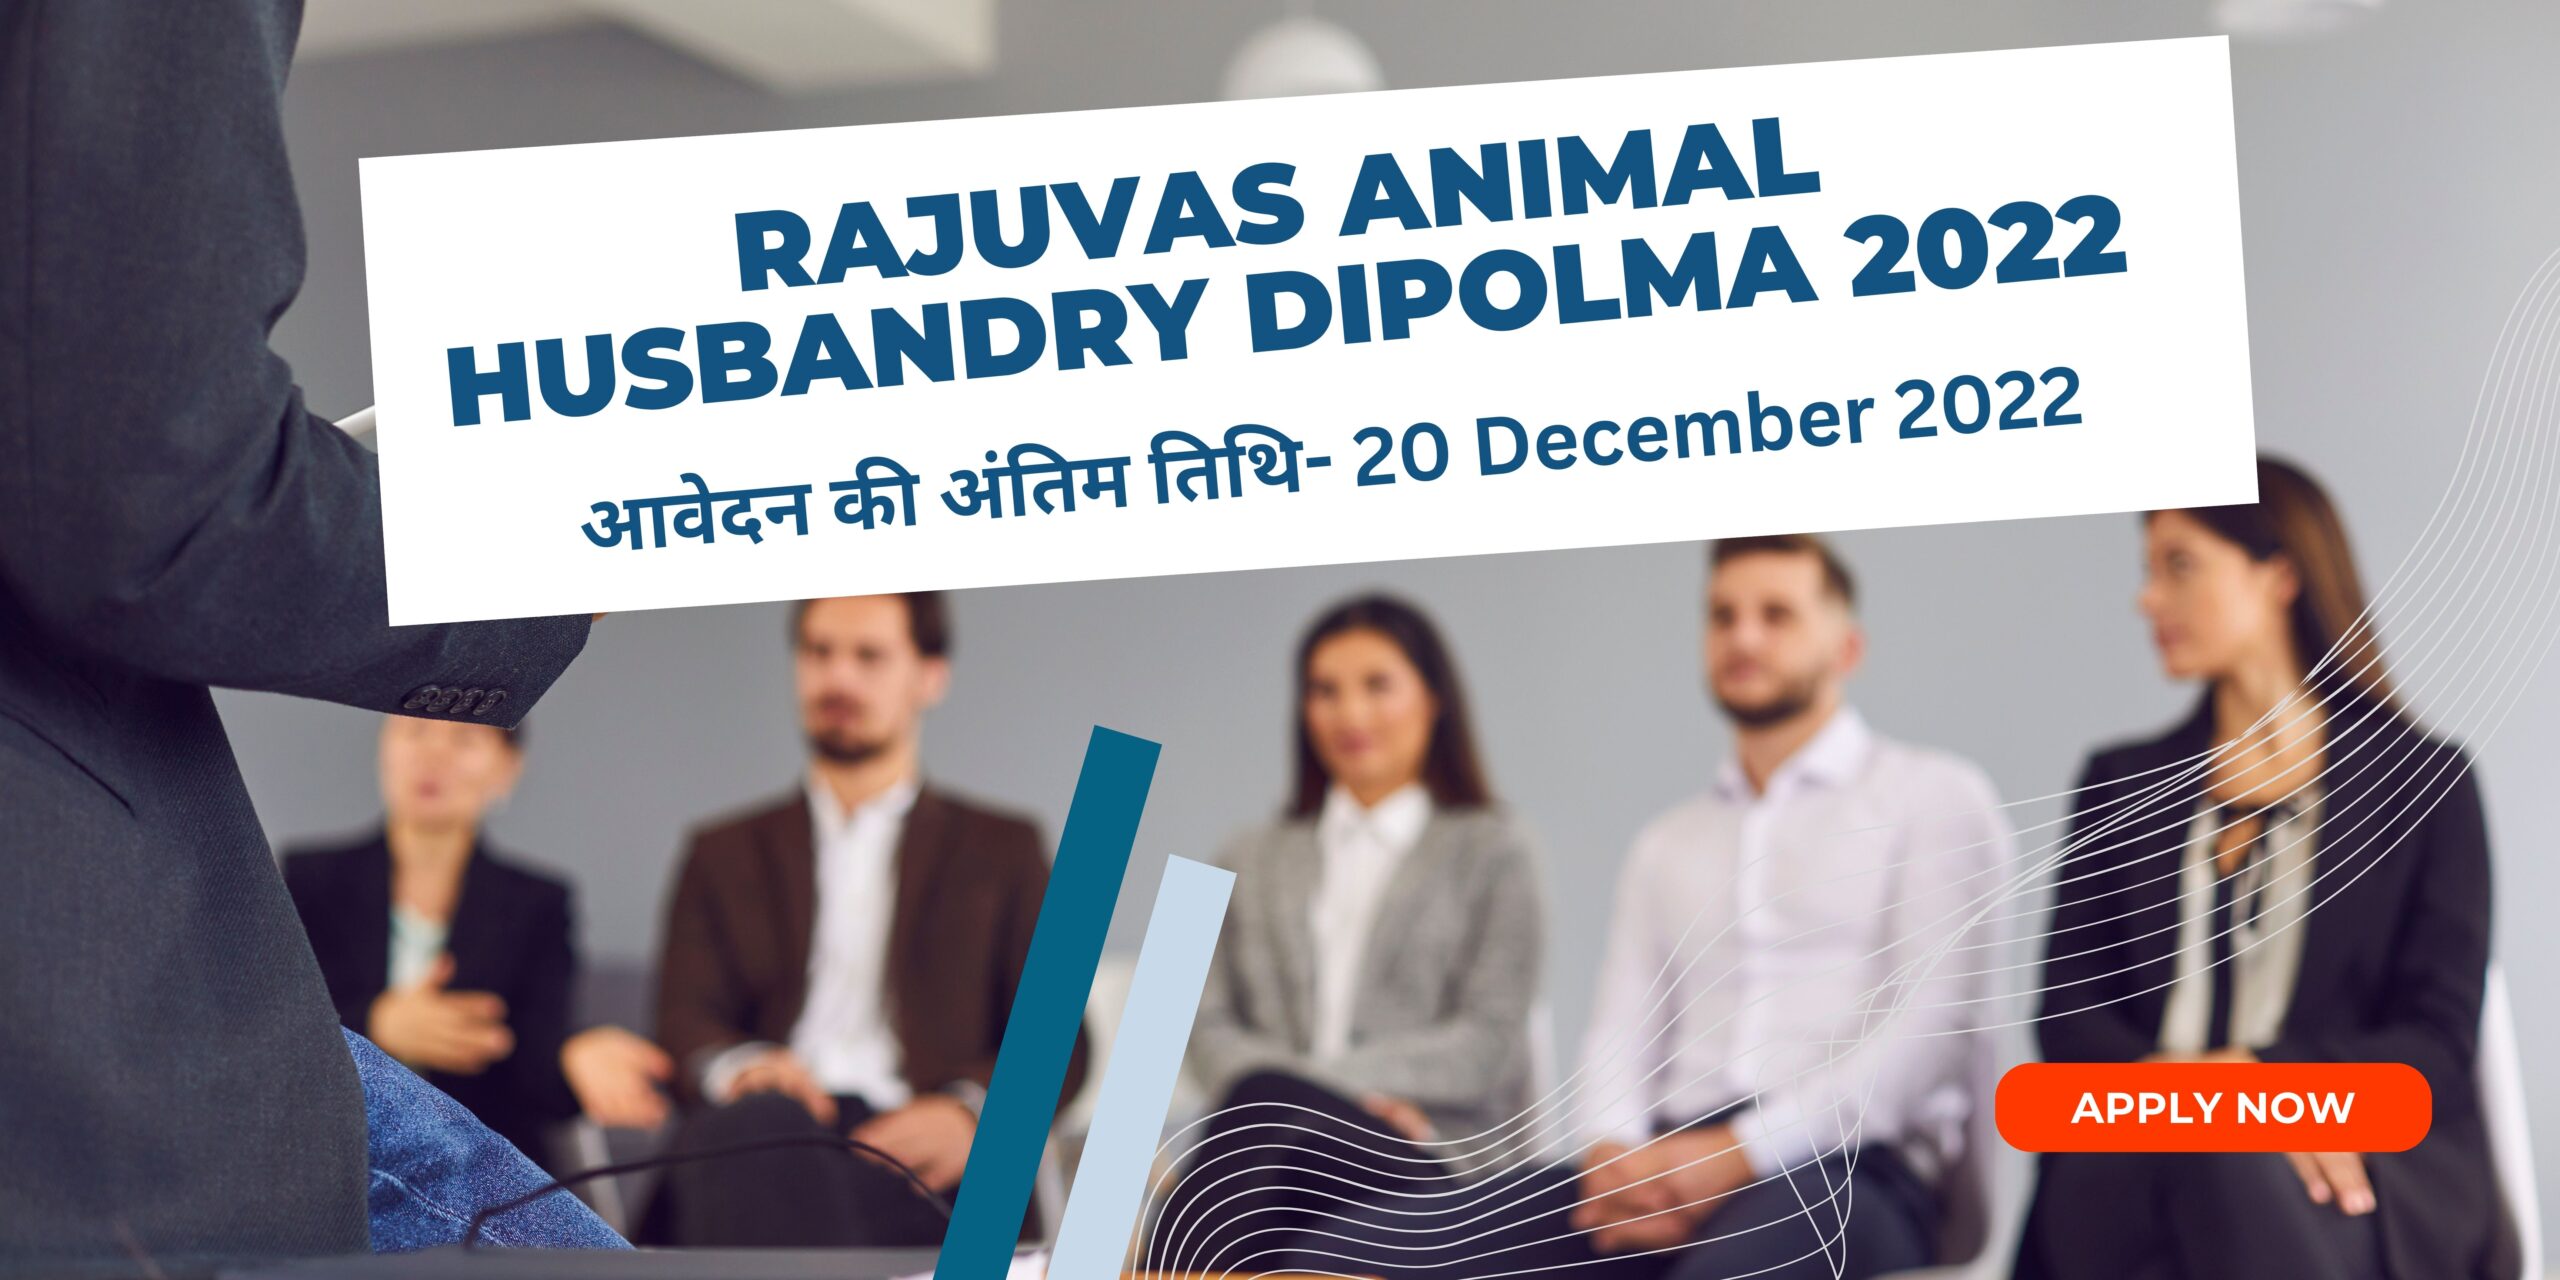 RAJUVAS Animal Husbandry Diploma 2022 last date to apply